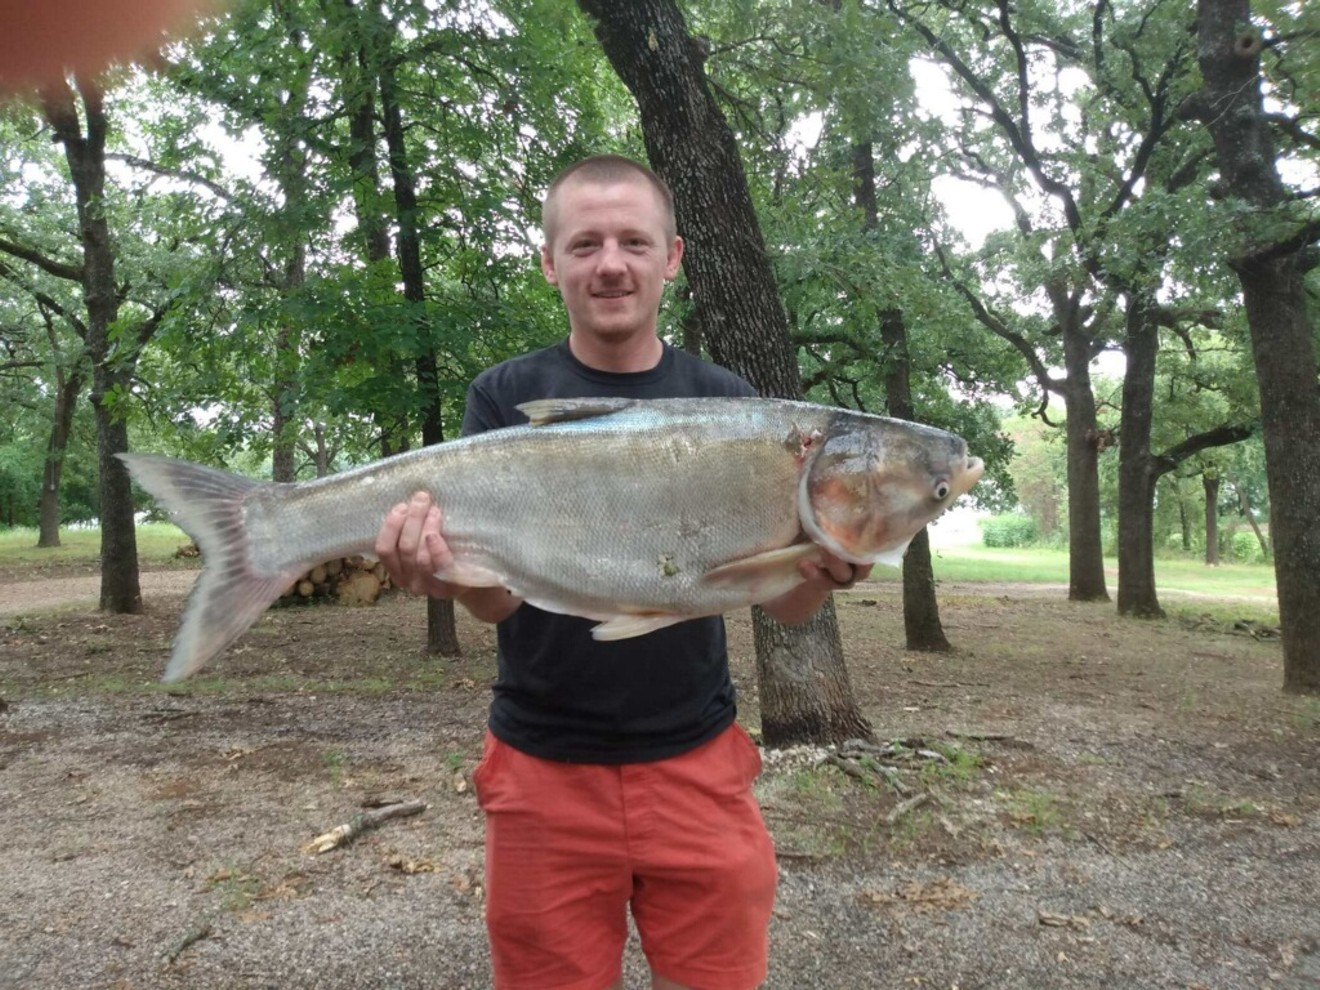 Stephen Banaszak holds an invasive silver carp he found roaming around Texas waters.